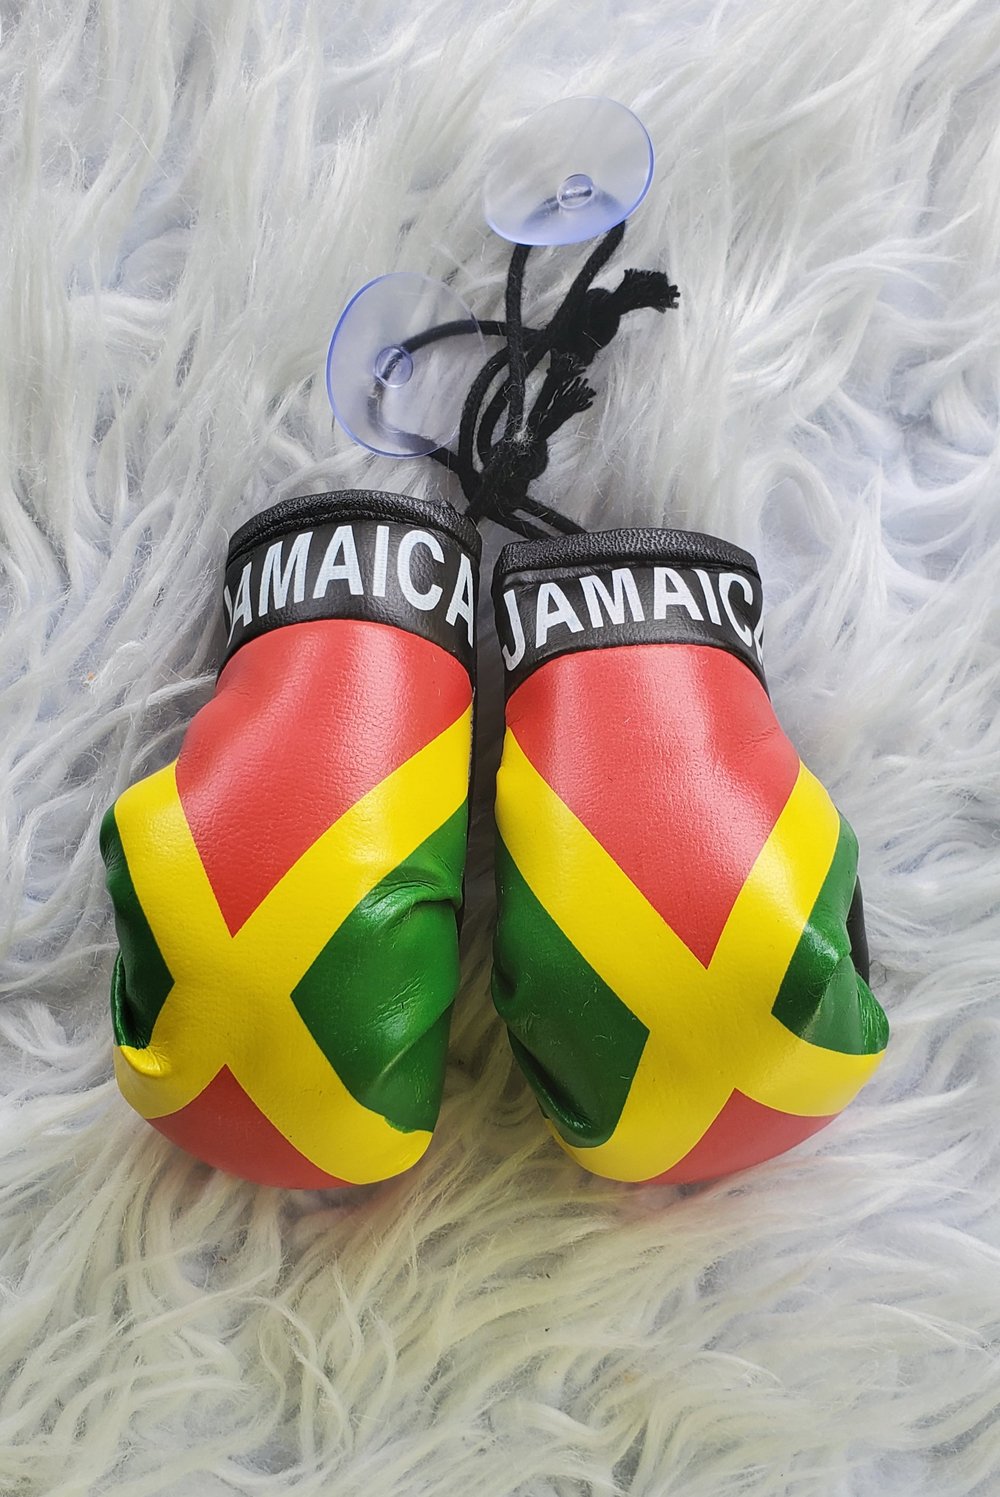 Jamaican rasta flag boxing gloves 